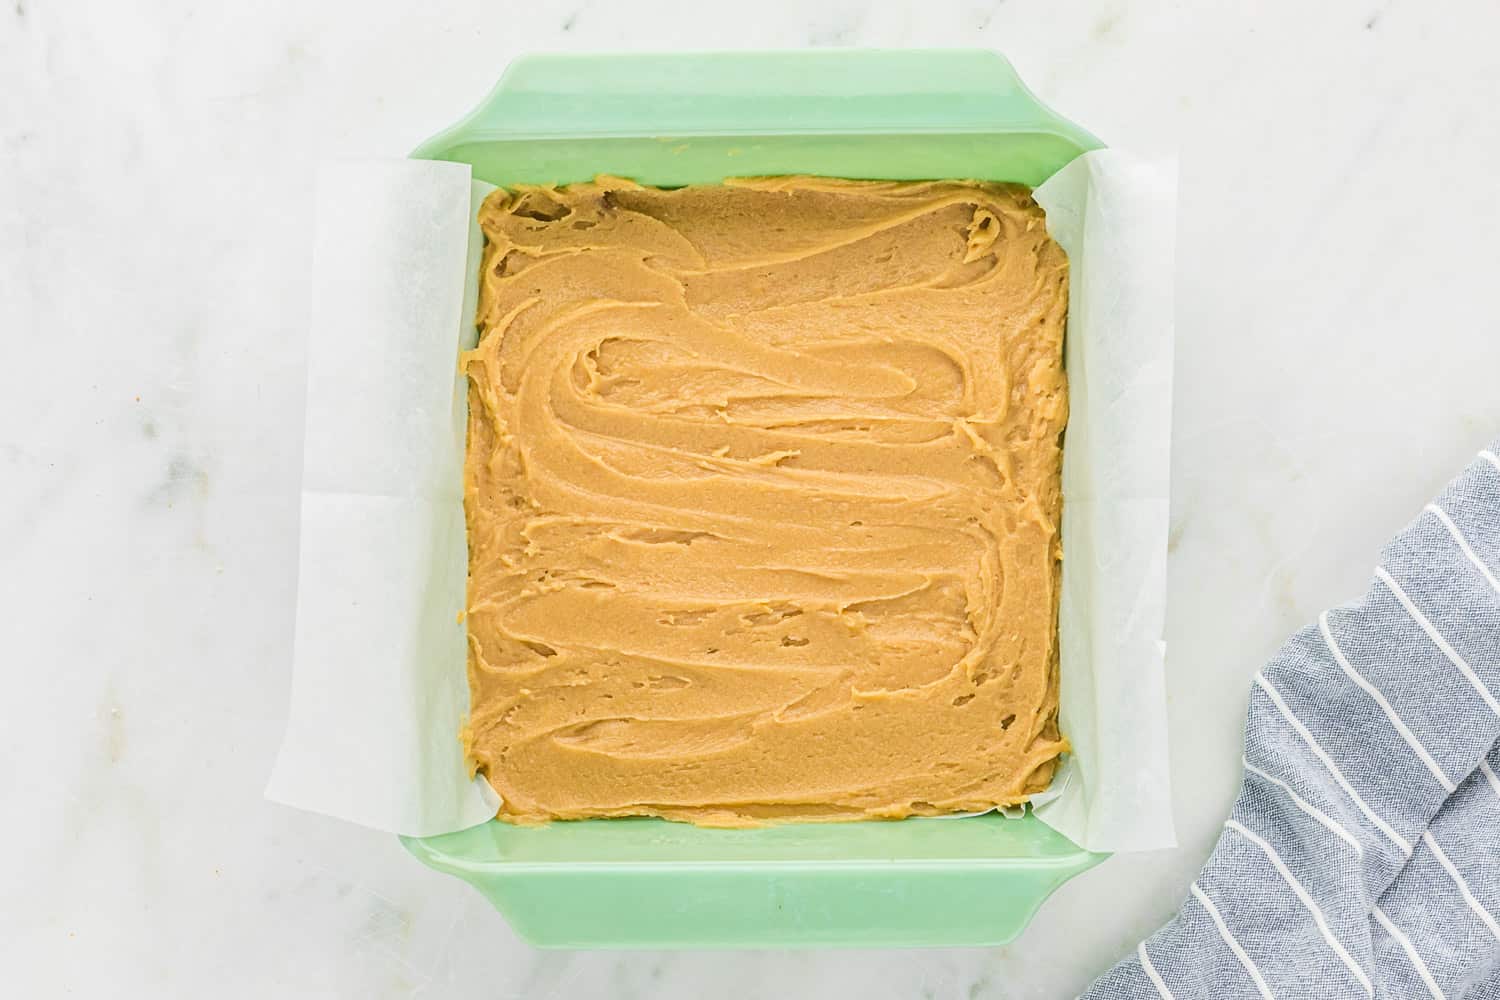 Unbaked blondie recipe in a green pan.